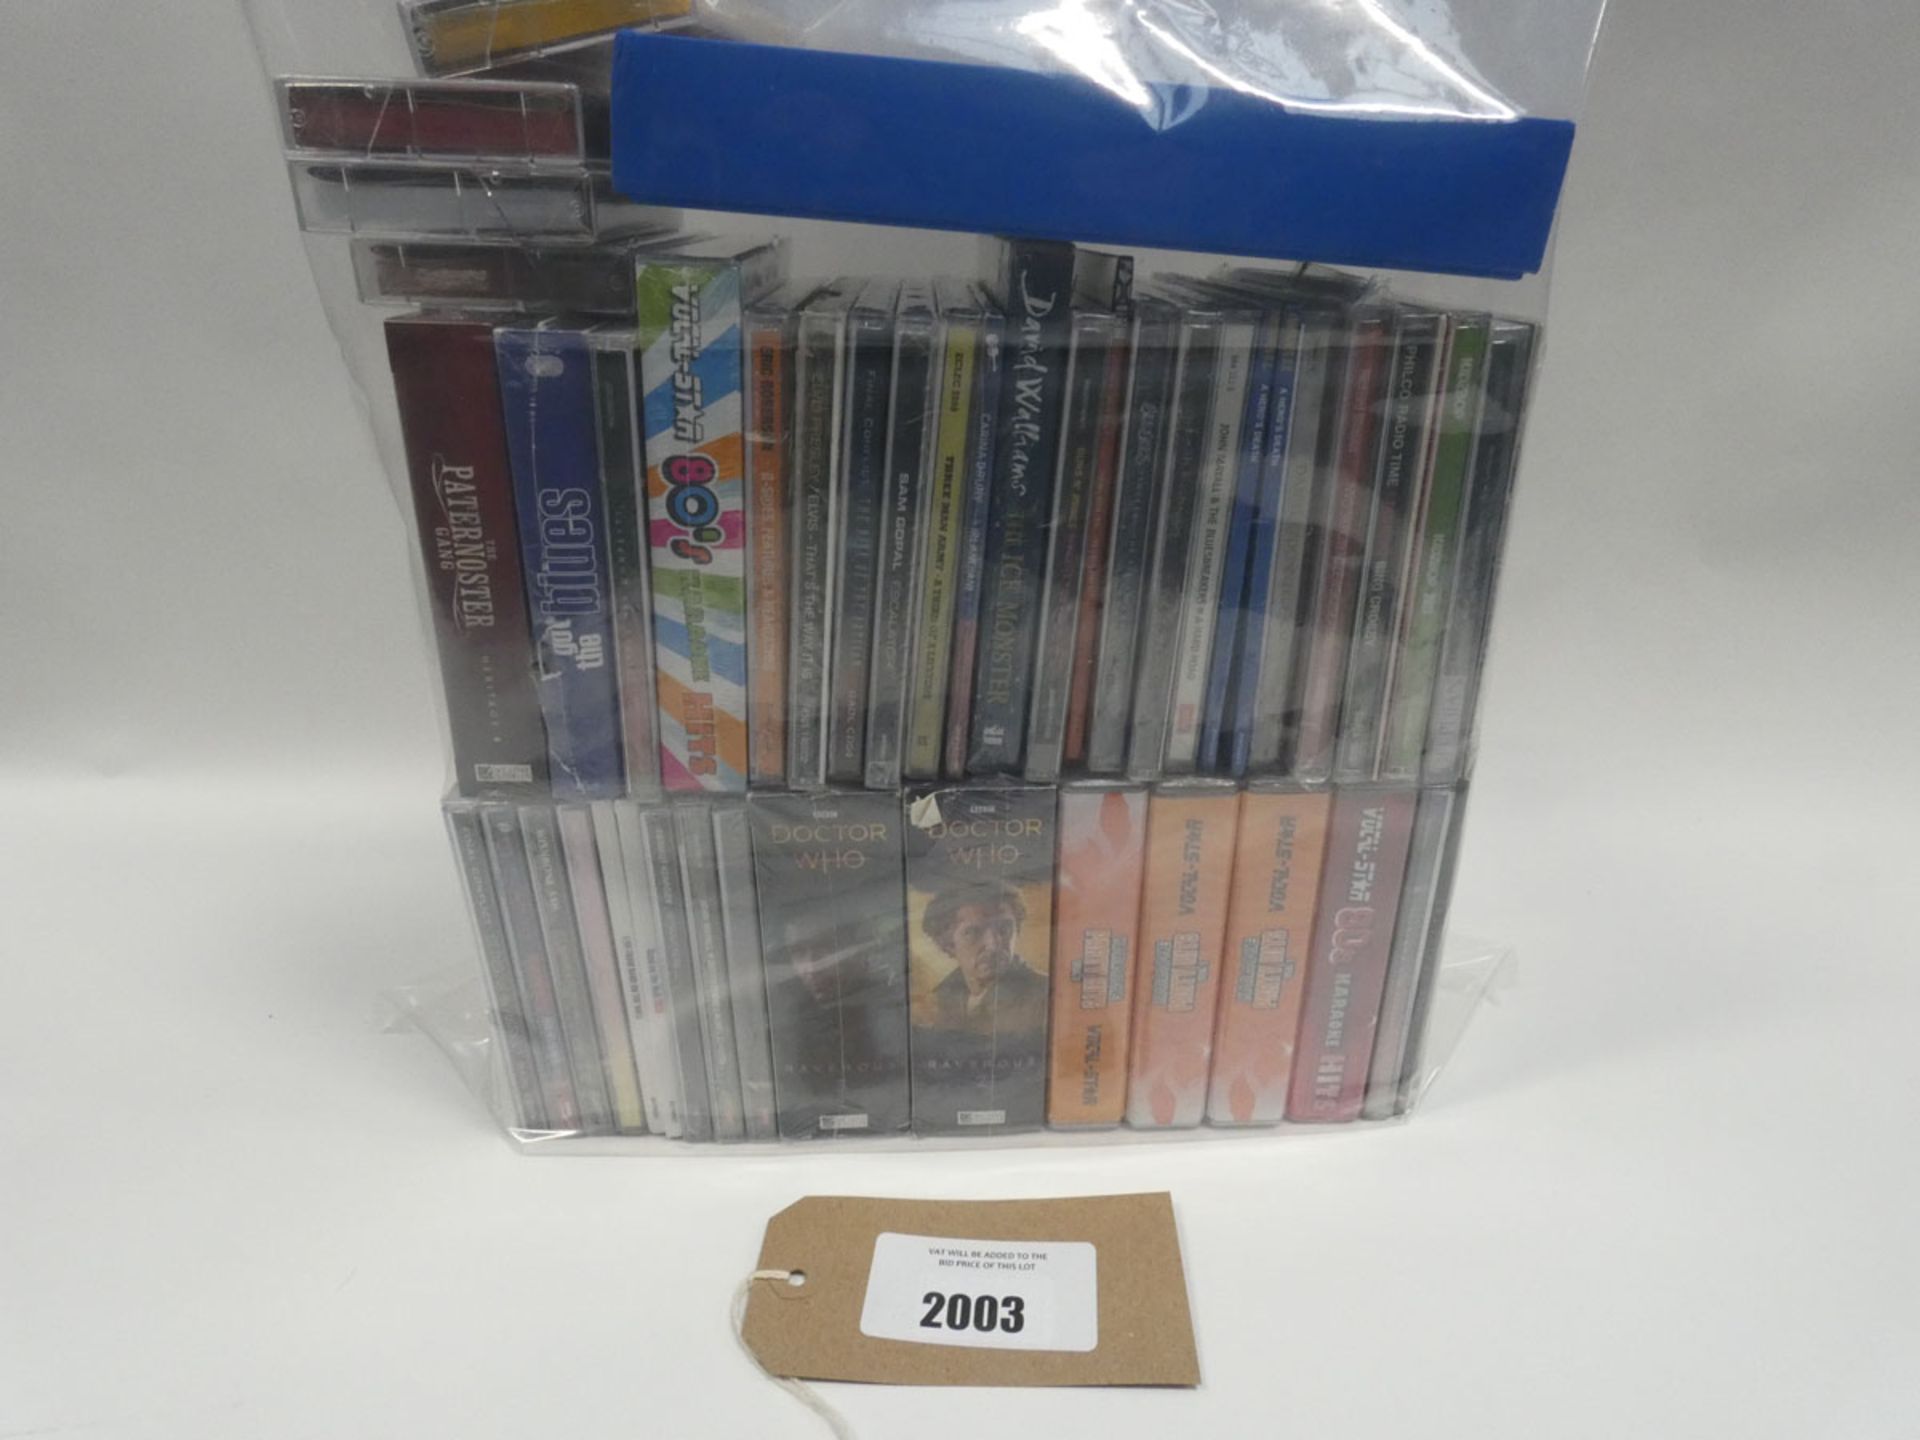 Bag containing quantity of music CD albums